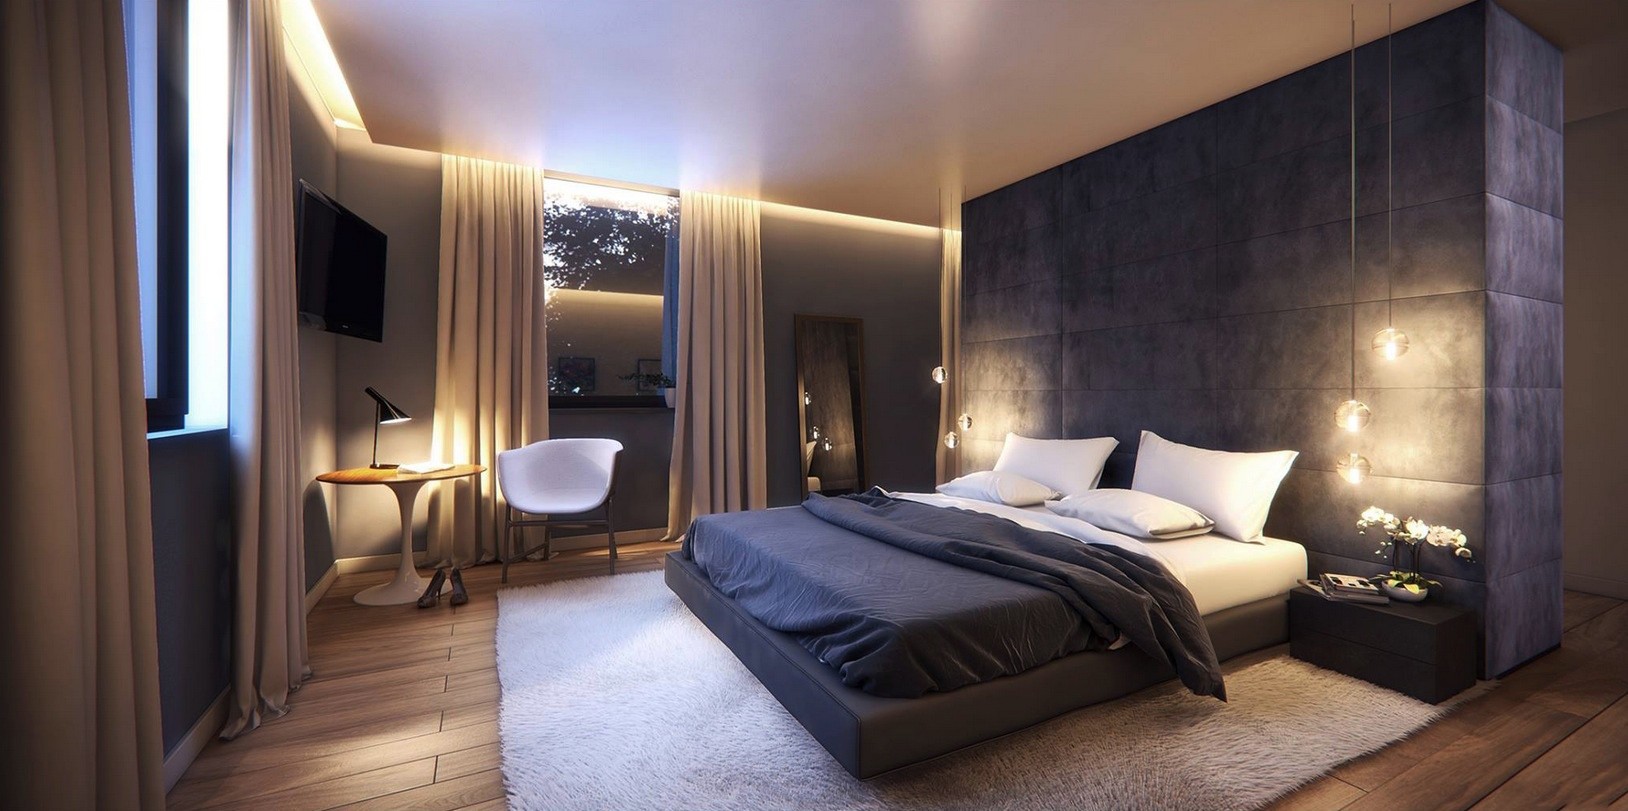 спальня в стиле модерн фото декор